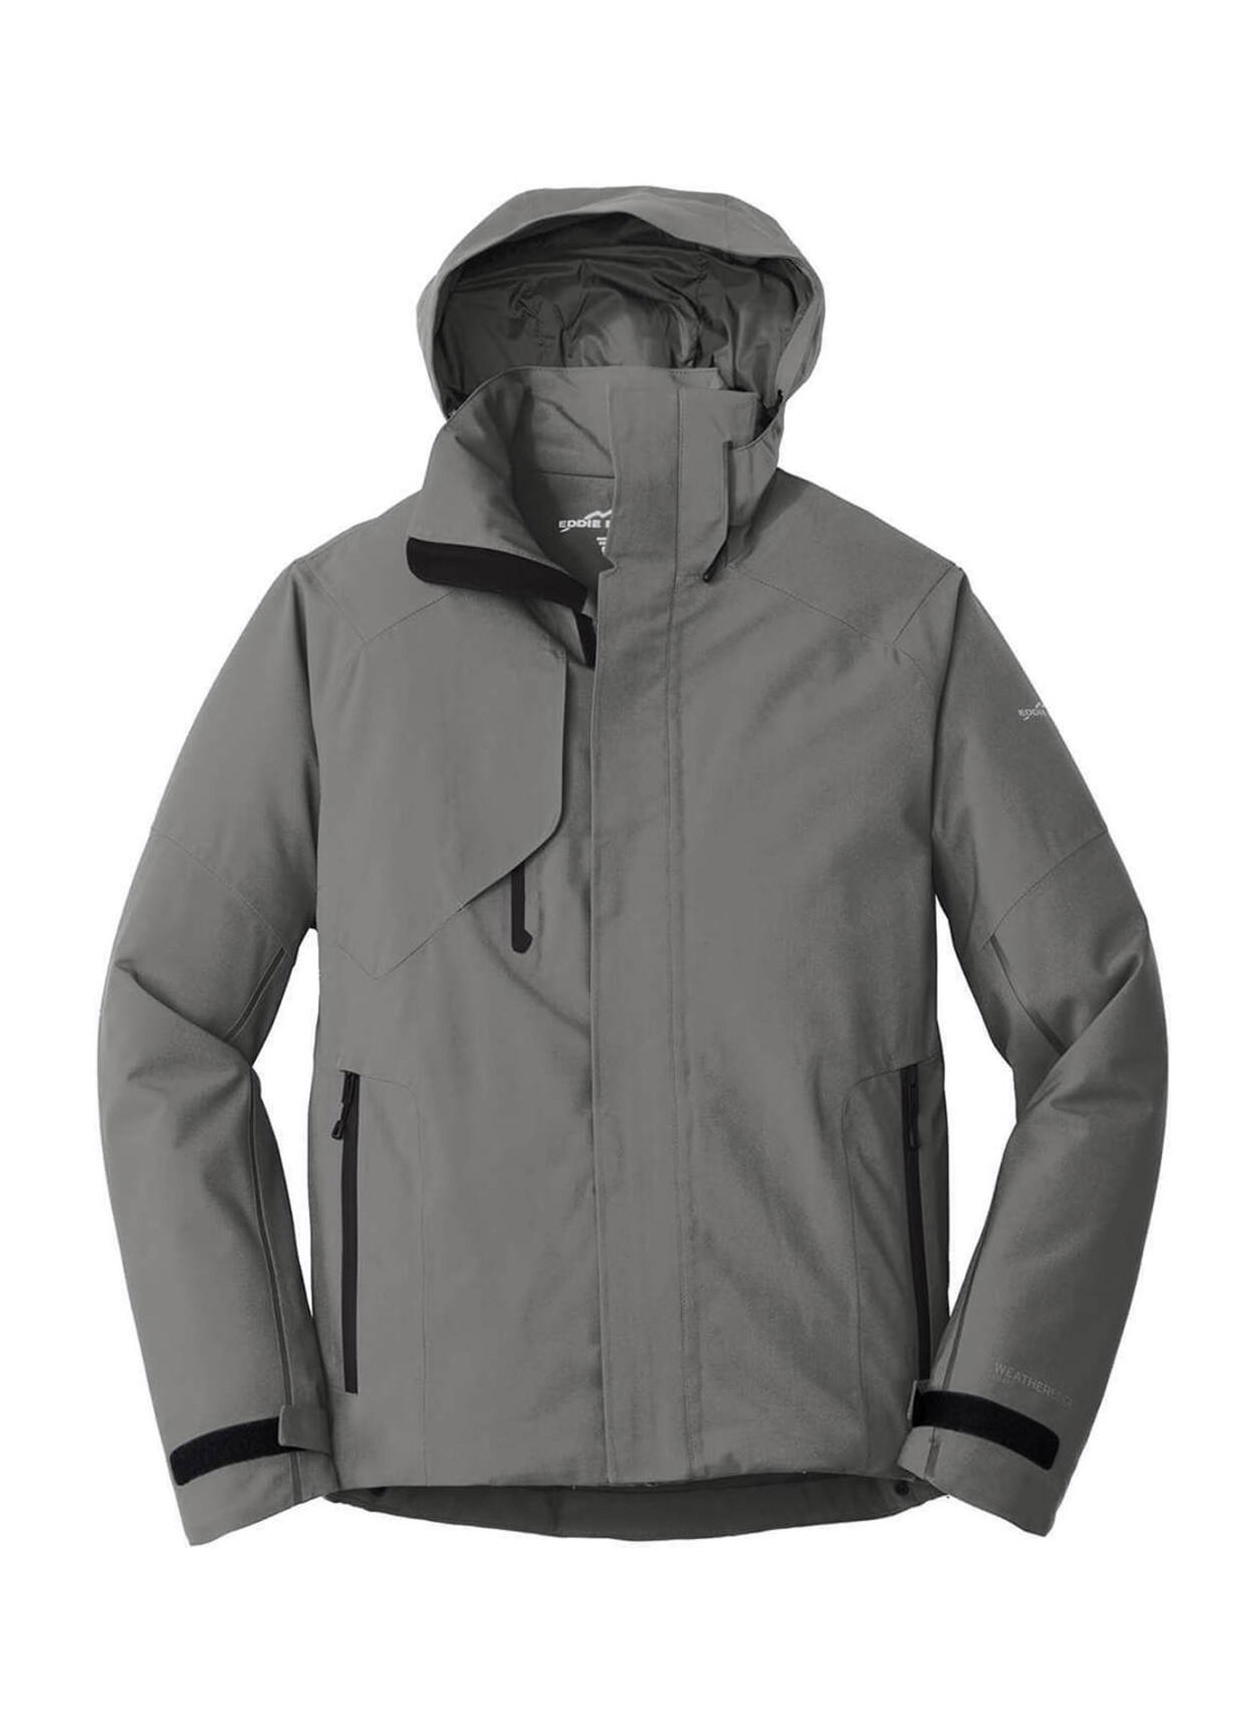 Eddie Bauer Men's Metal Grey WeatherEdge Plus Insulated Jacket